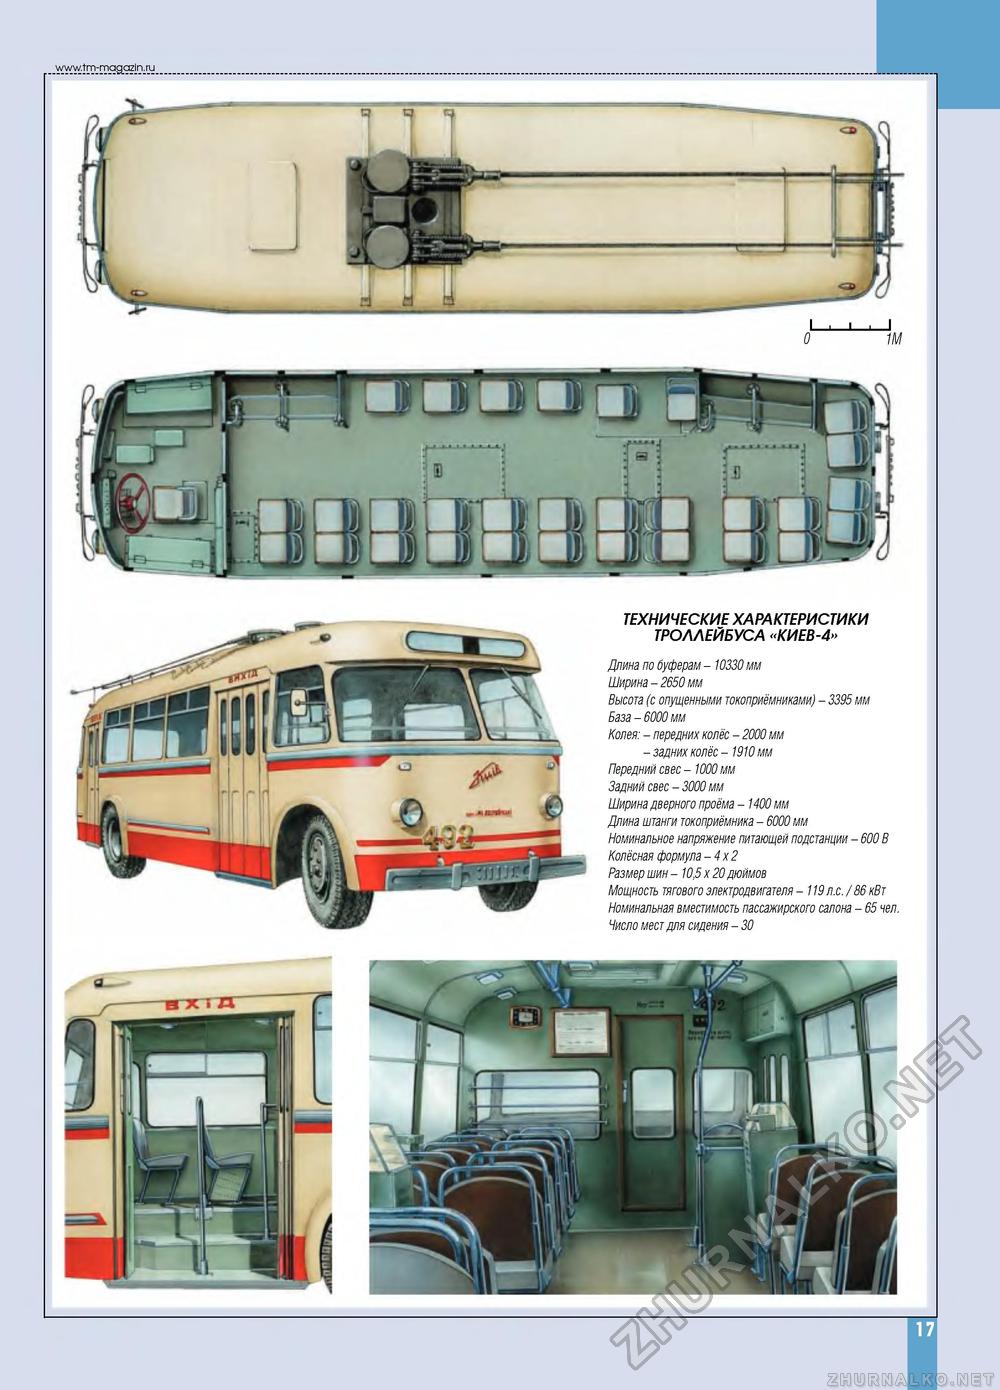 Двигатель троллейбуса характеристики